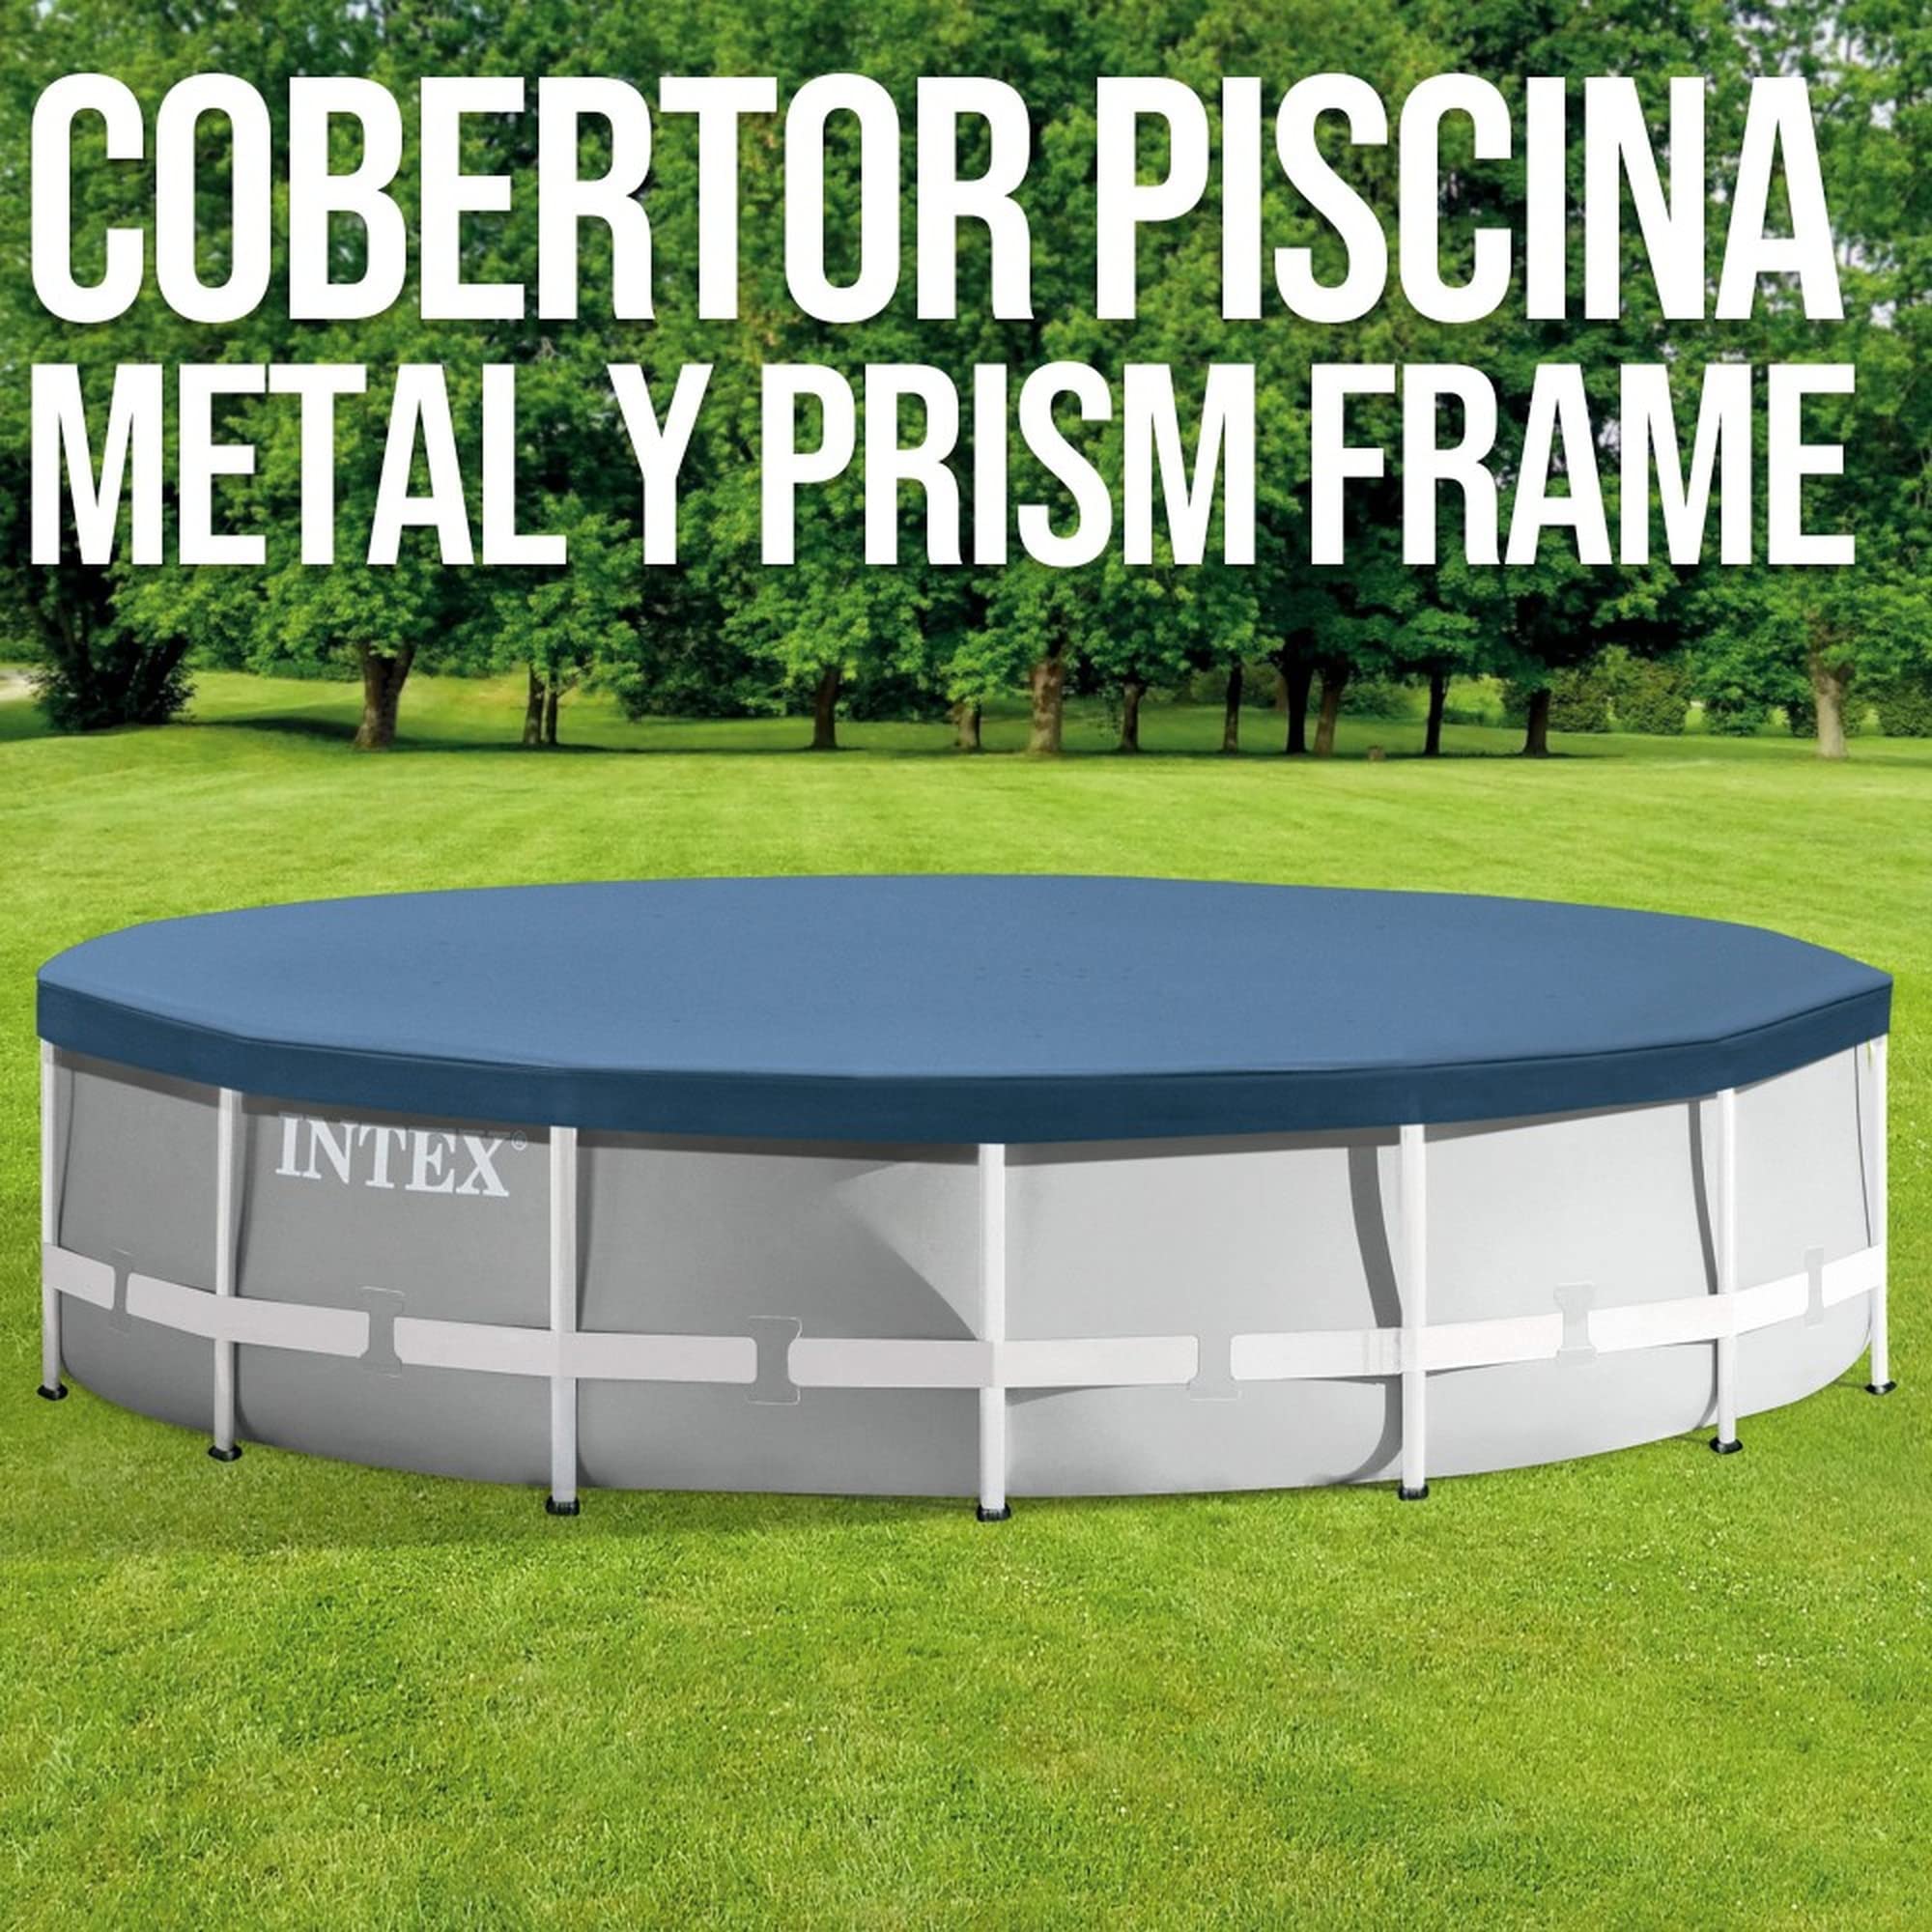 Intex Metal Frame Pool Cover  - Like New